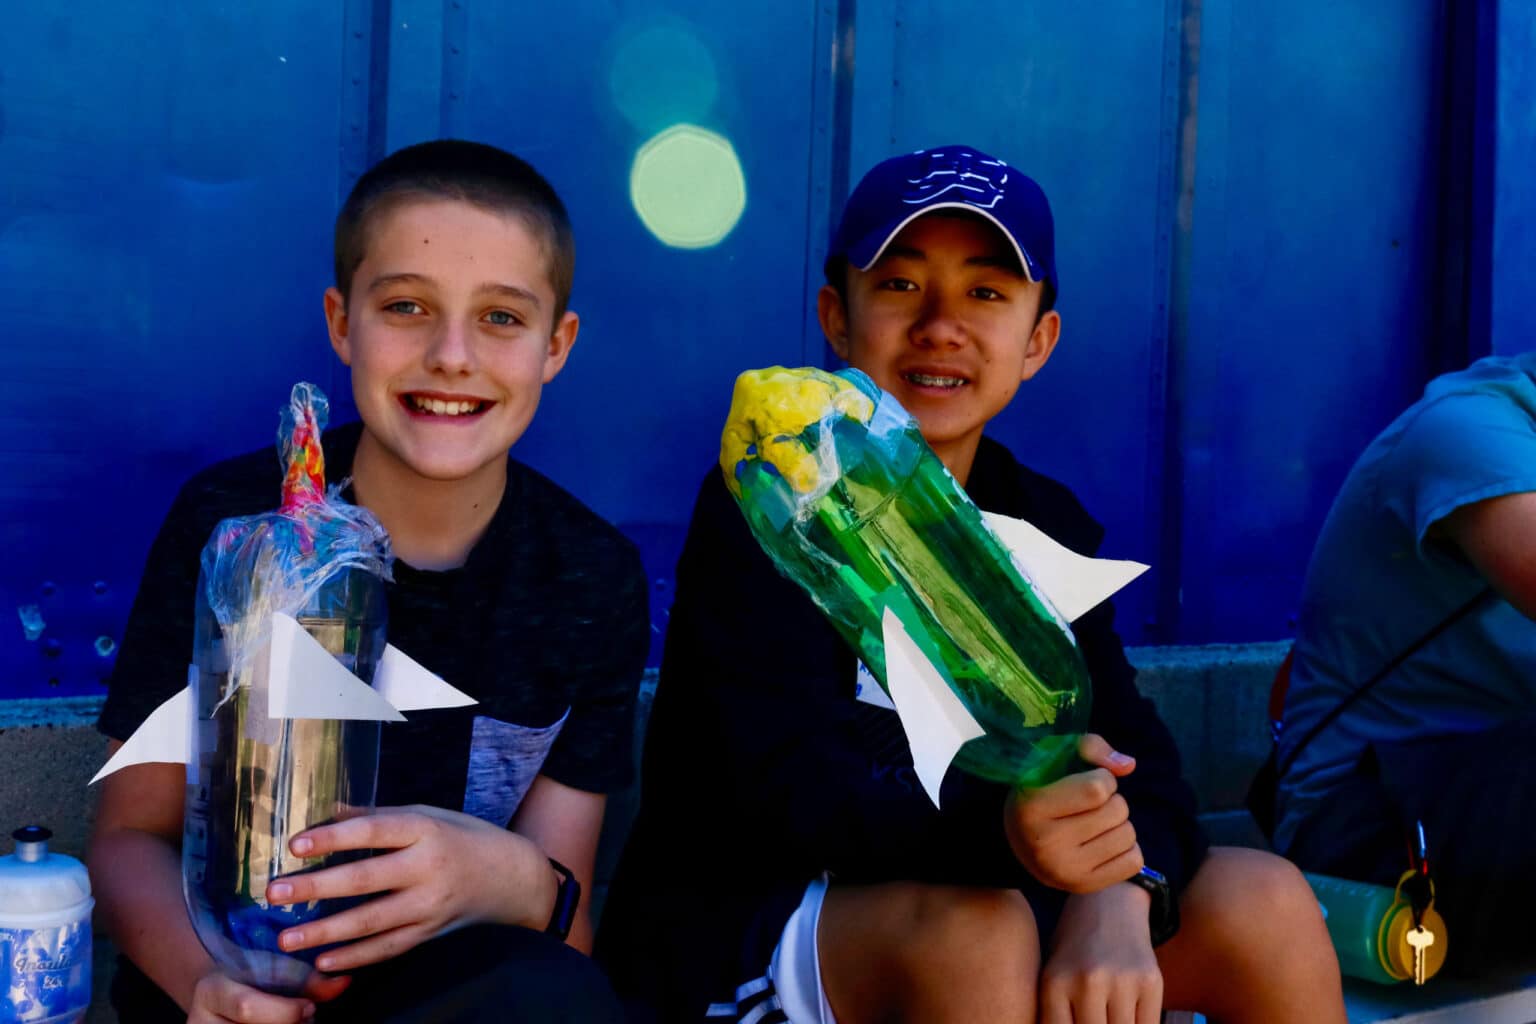 Boys smiling holding rockets.